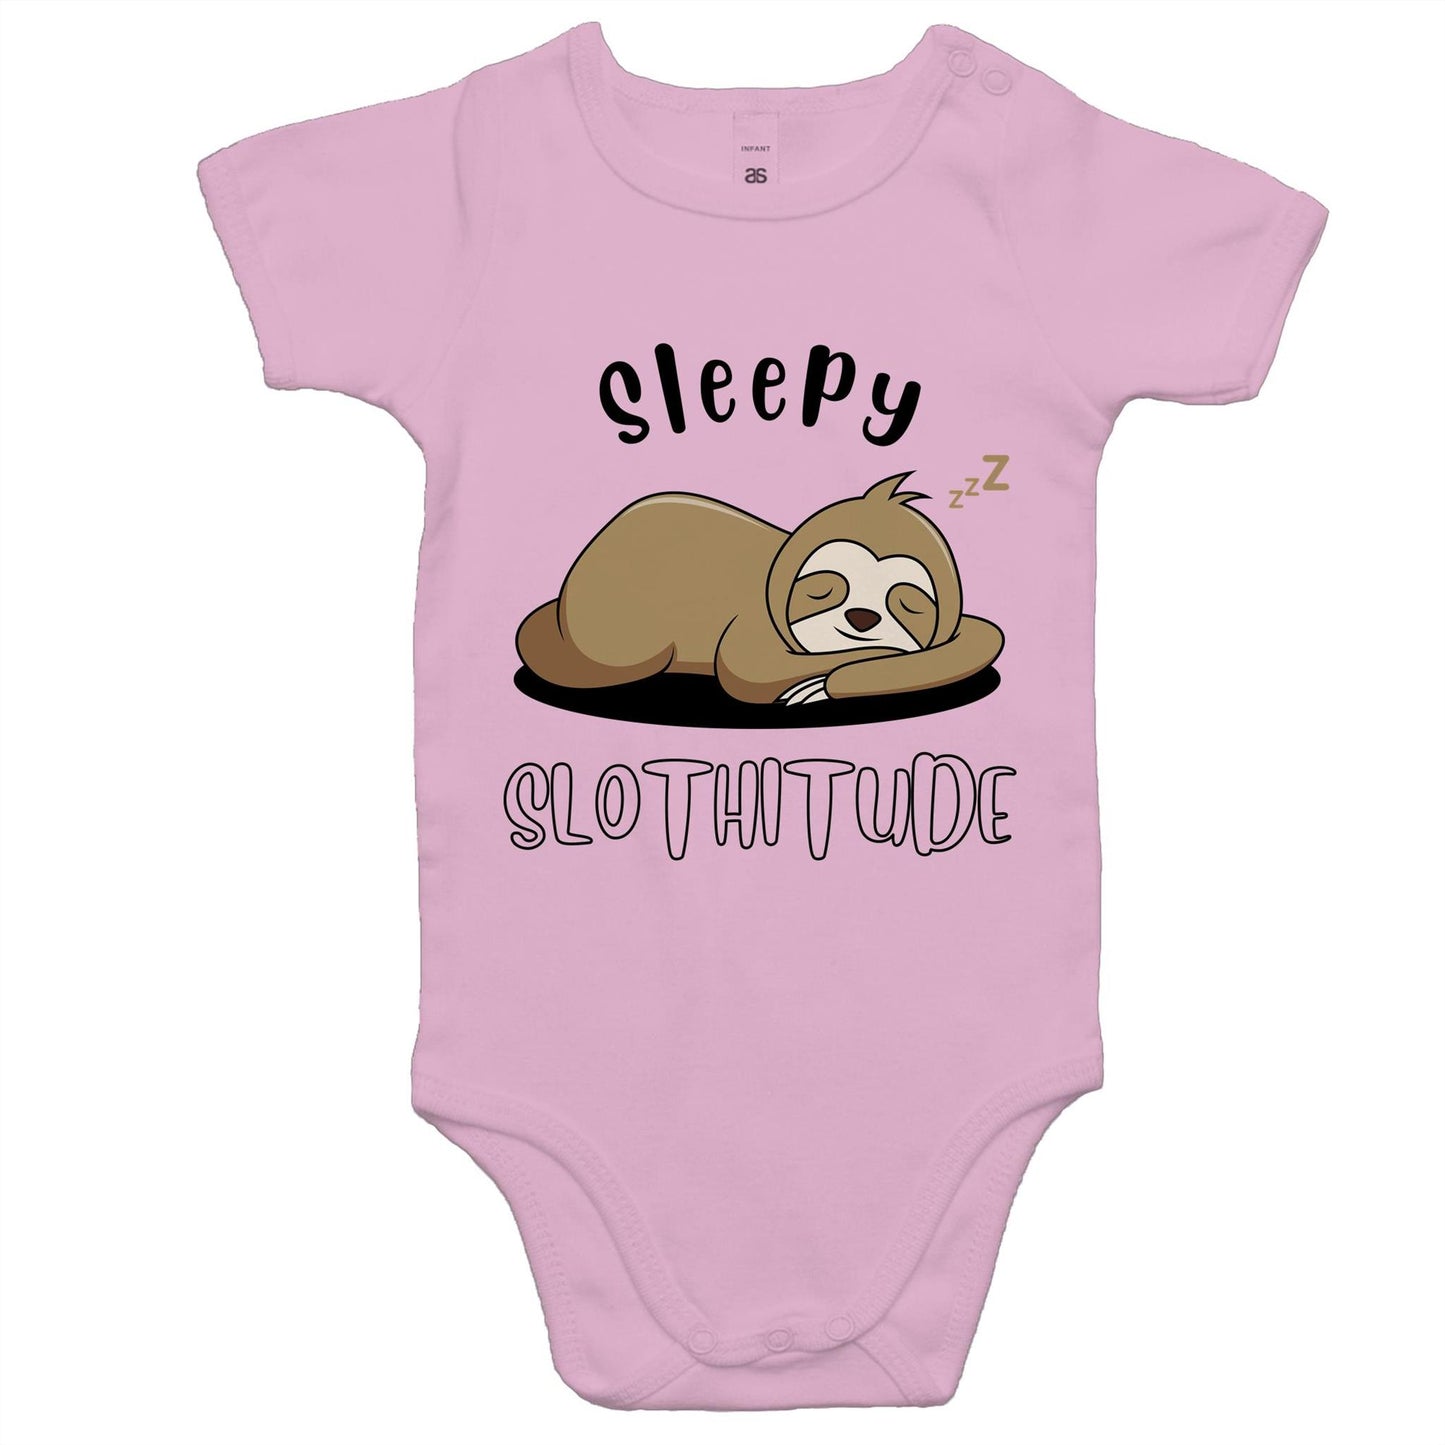 Sleepy Slothitude - Baby Bodysuit Pink Baby Bodysuit animal